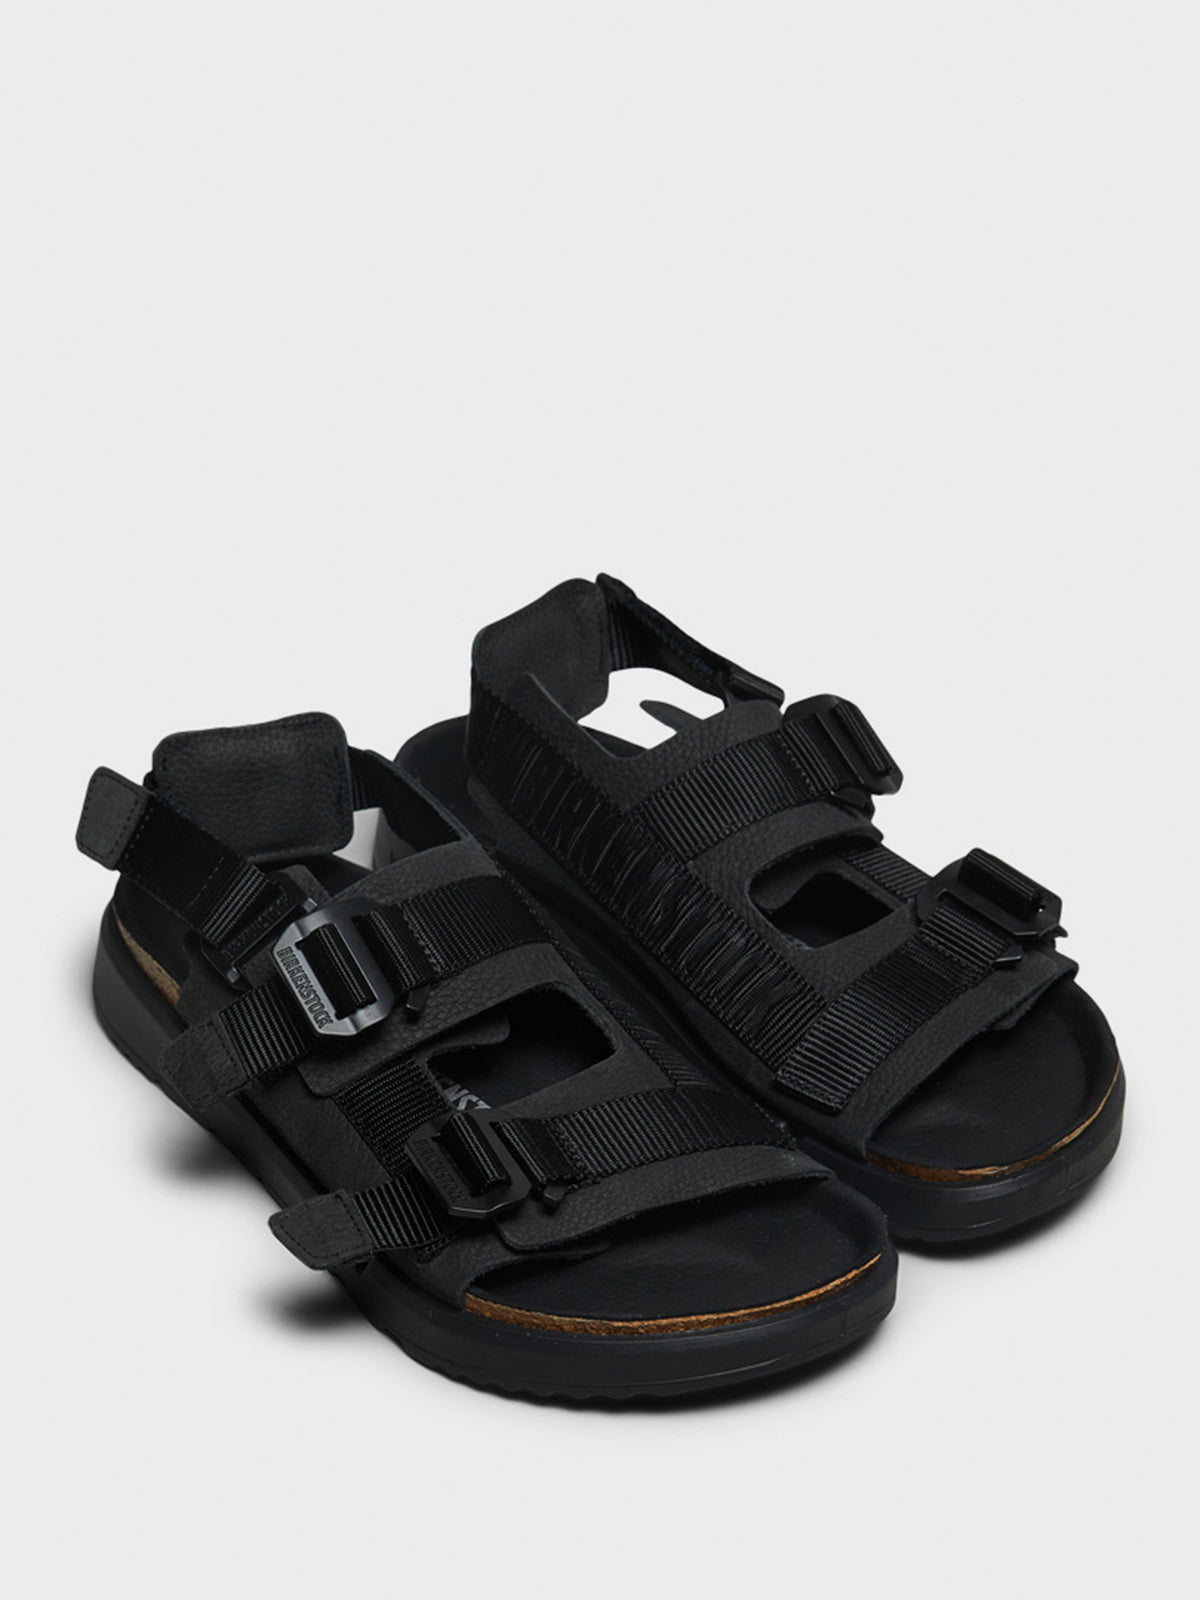 Shinjuku Leather Sandals in Black